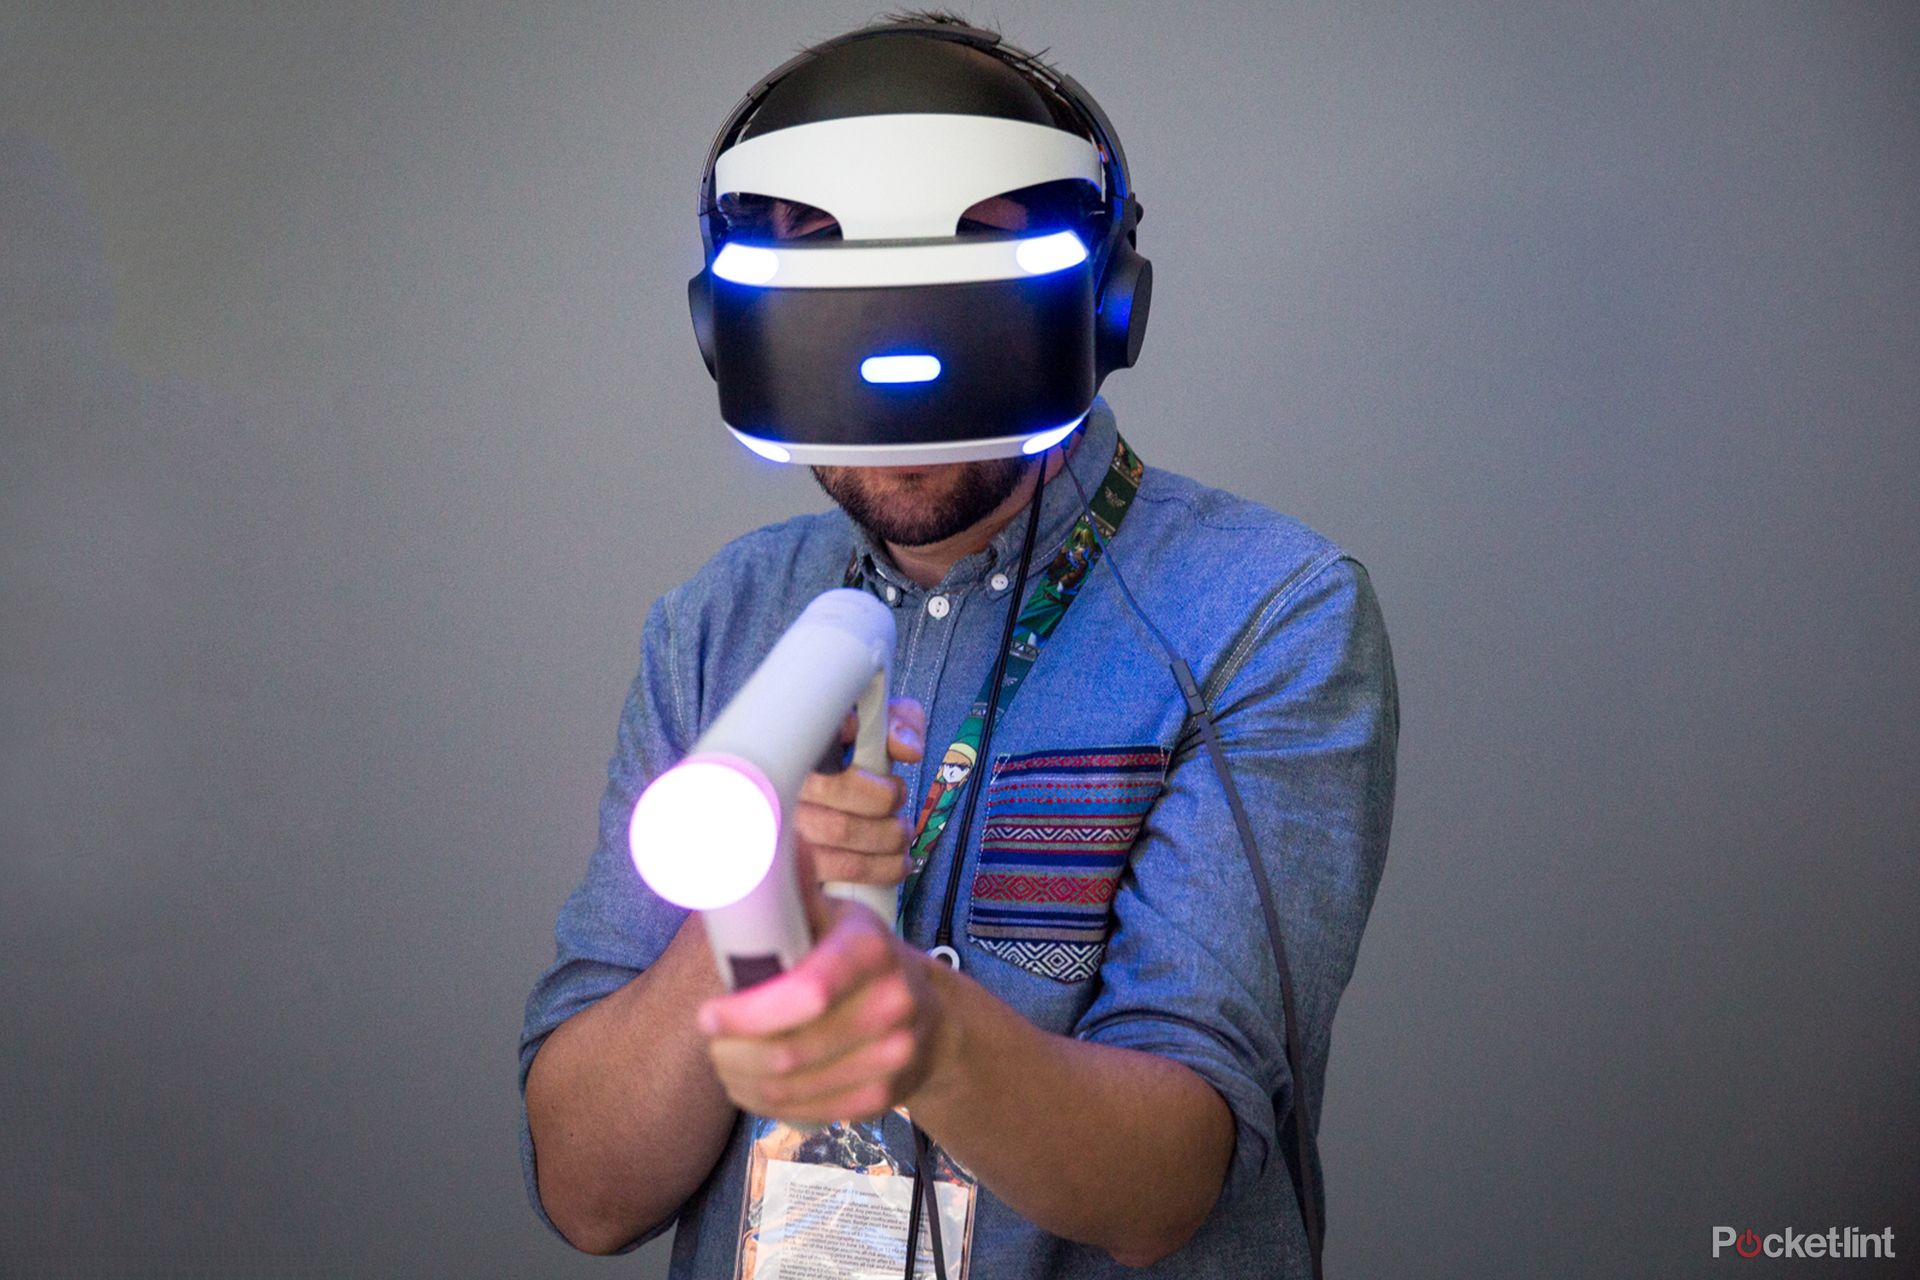 Best Sony VR games 2023